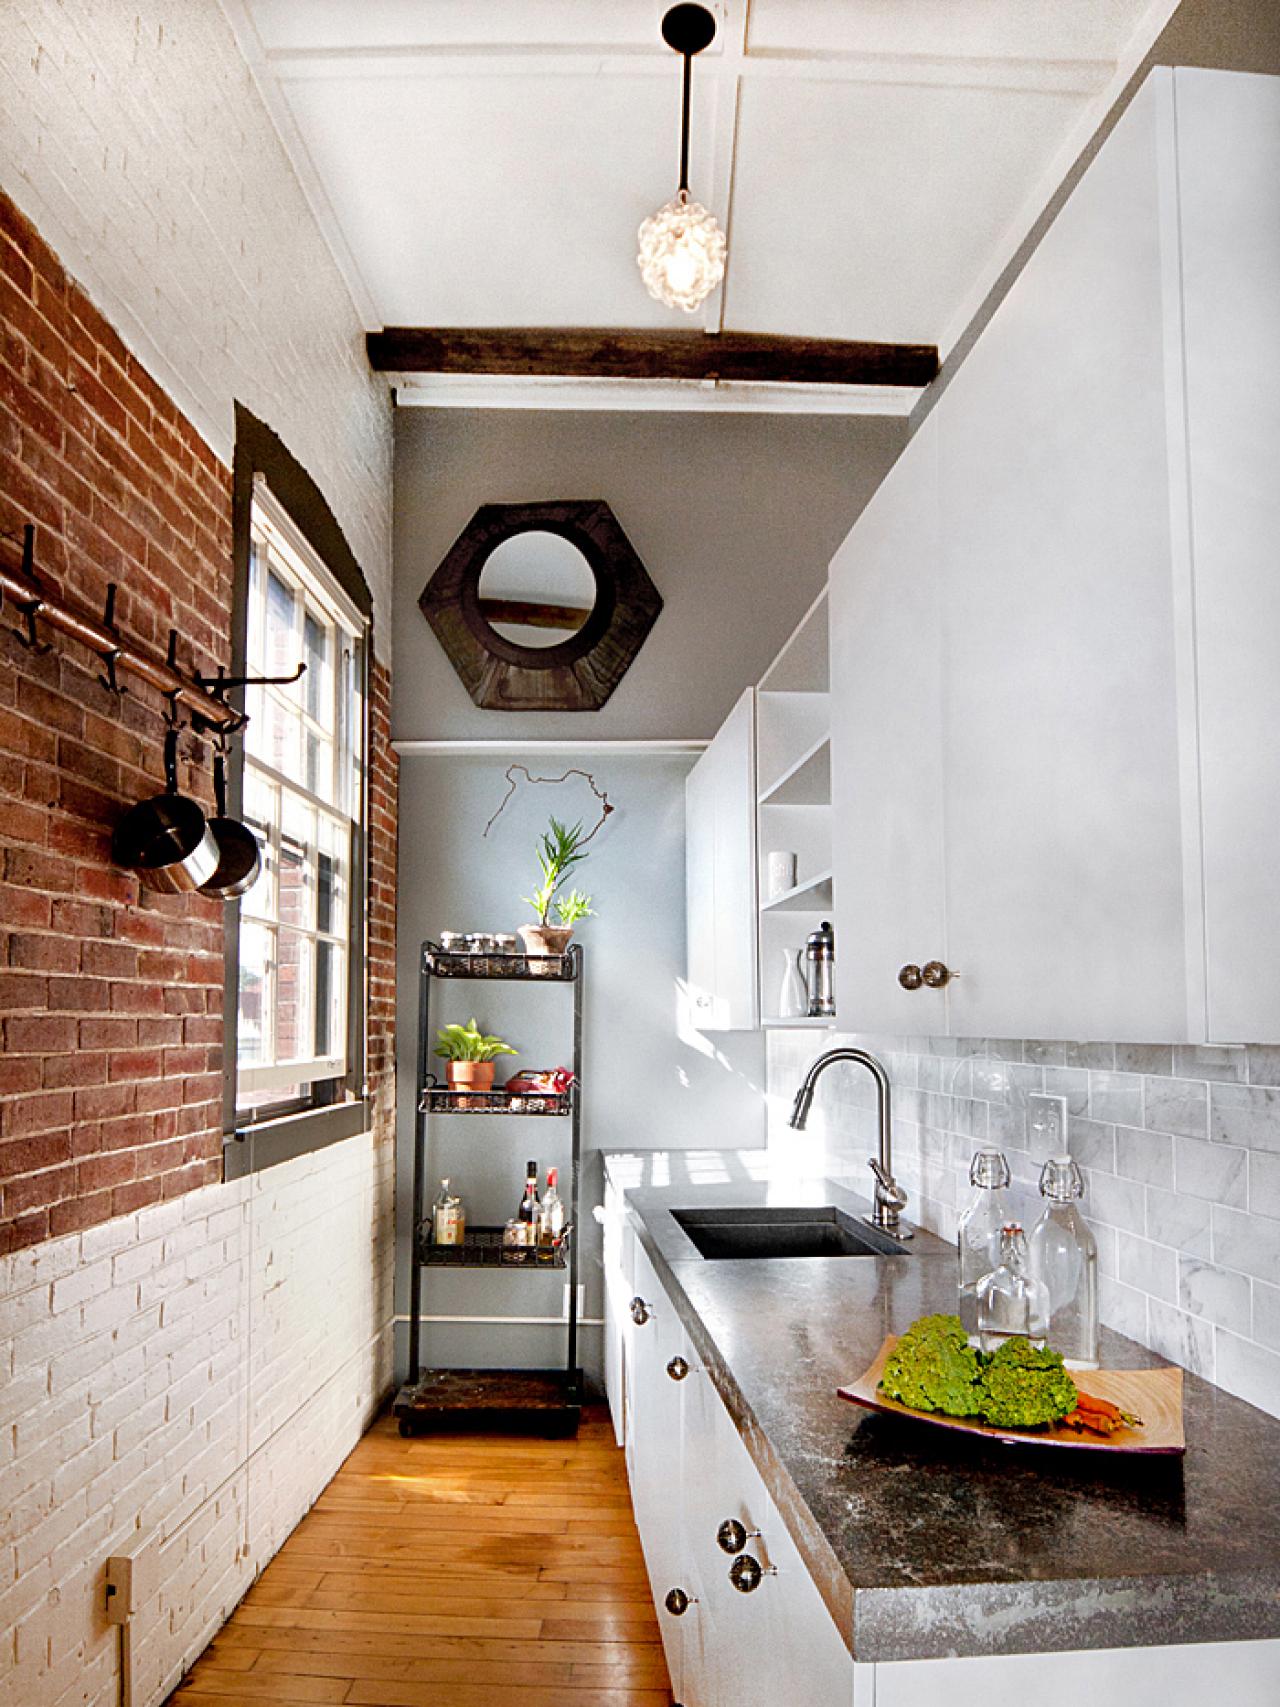 Tiny Home Kitchen Design Ideas ~ 30 Best Small Kitchen Decor And Design ...